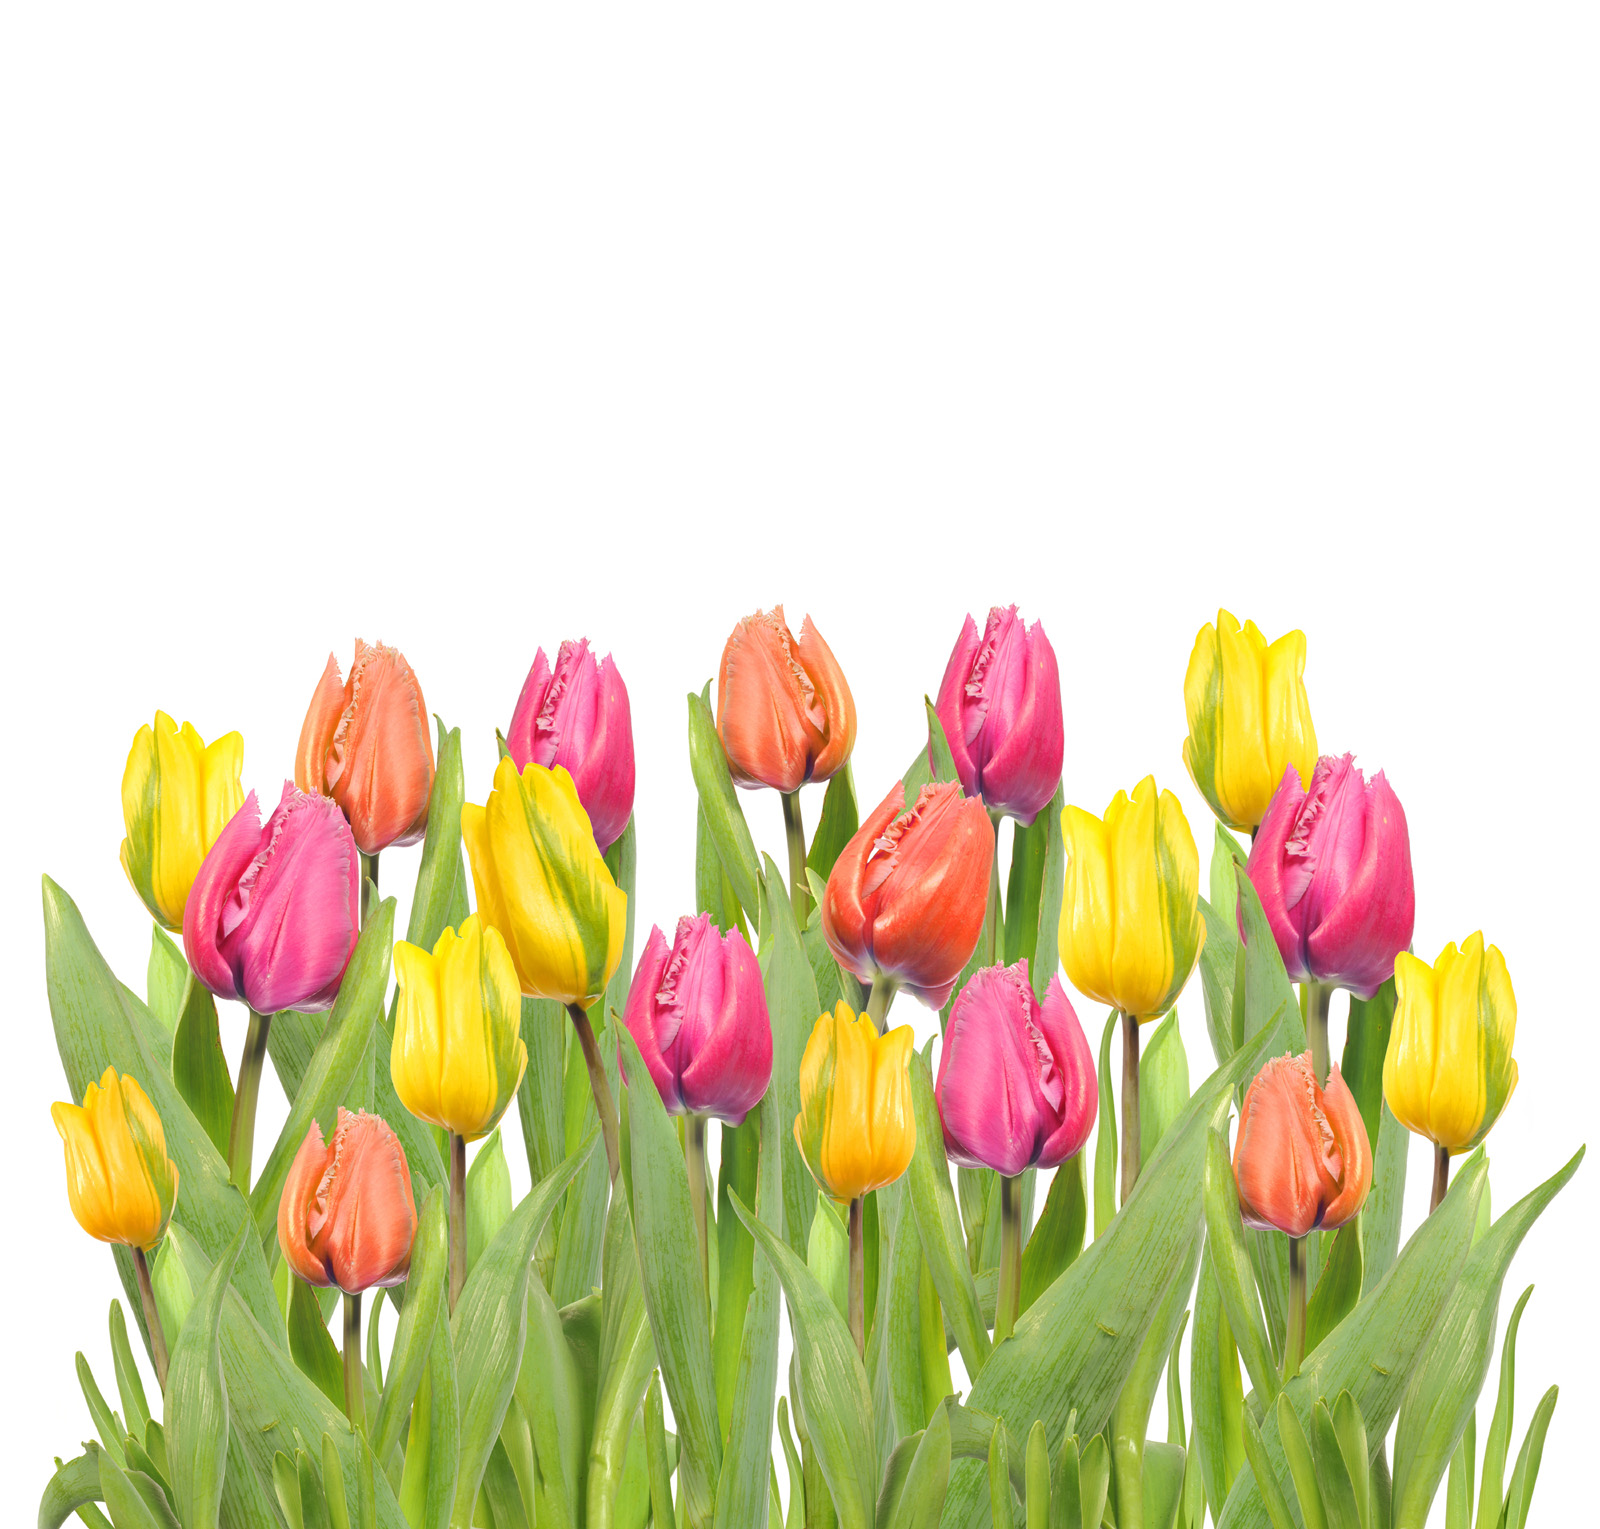 Red, yellow and orange tulips 50997 - Tulip - Flowers